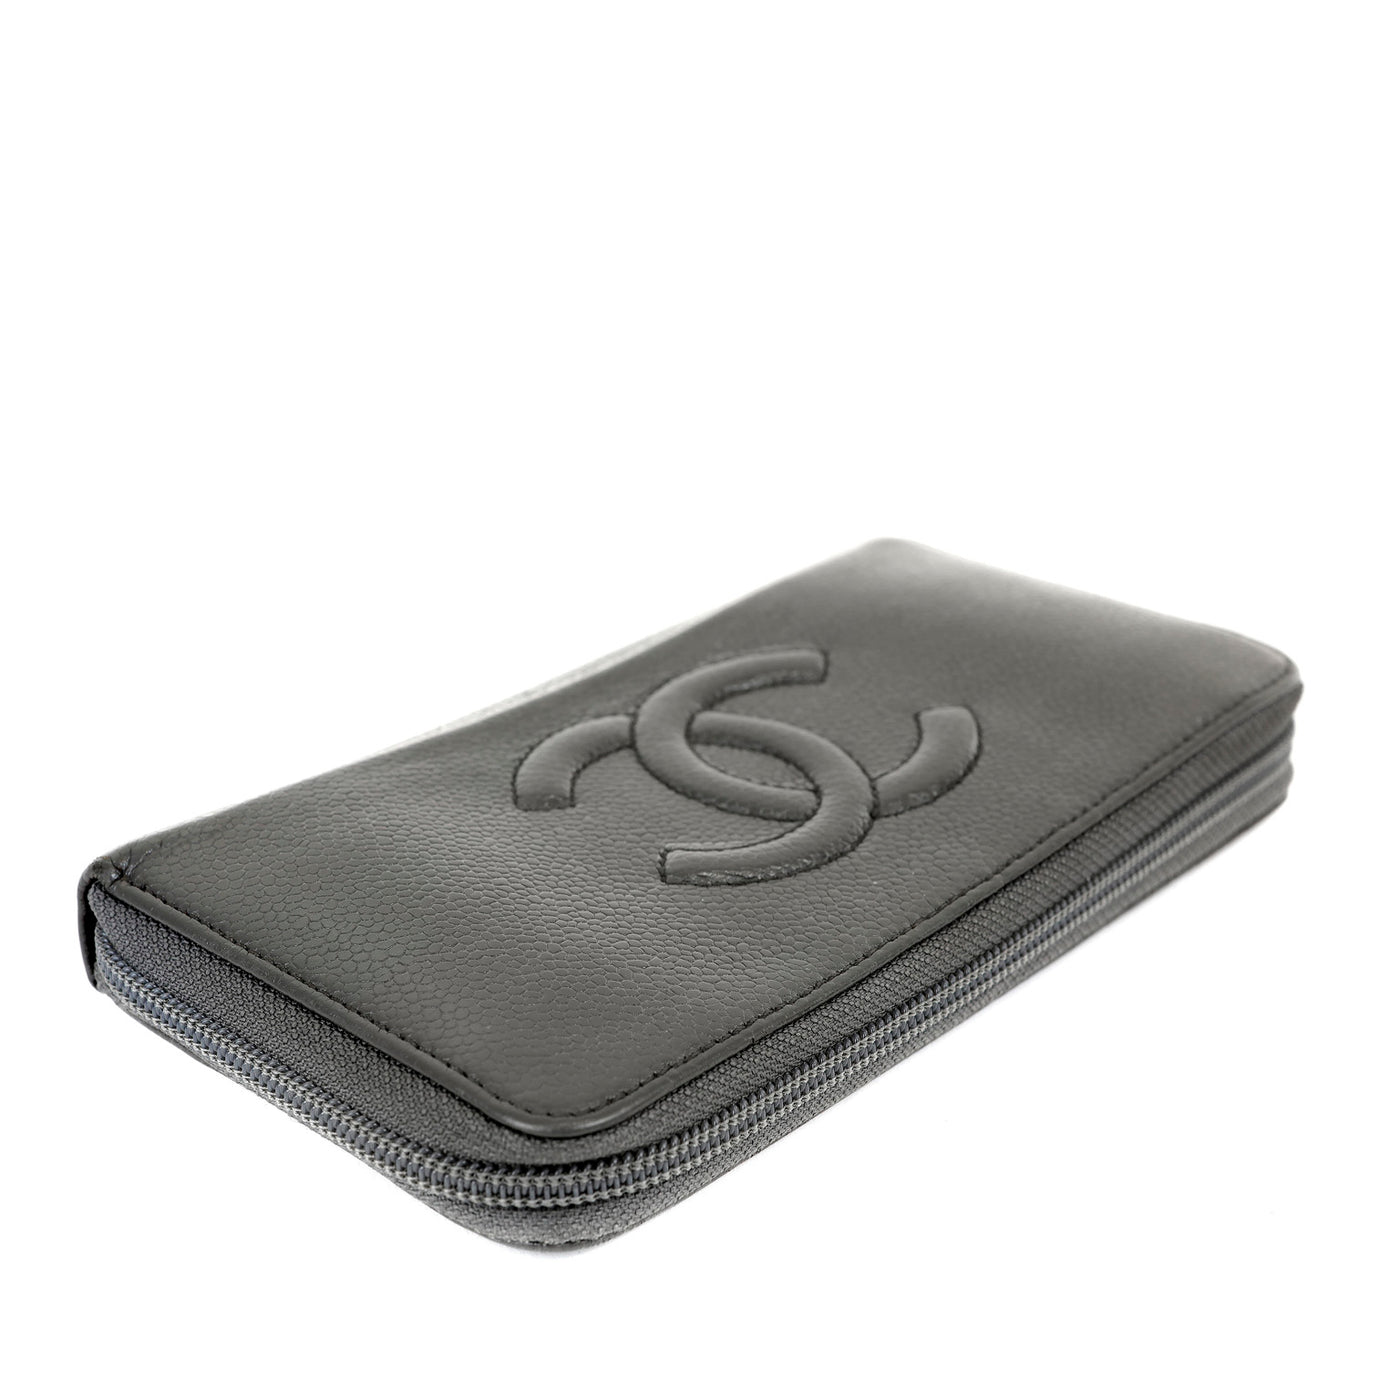 Chanel Gray Caviar wallet w/ CC